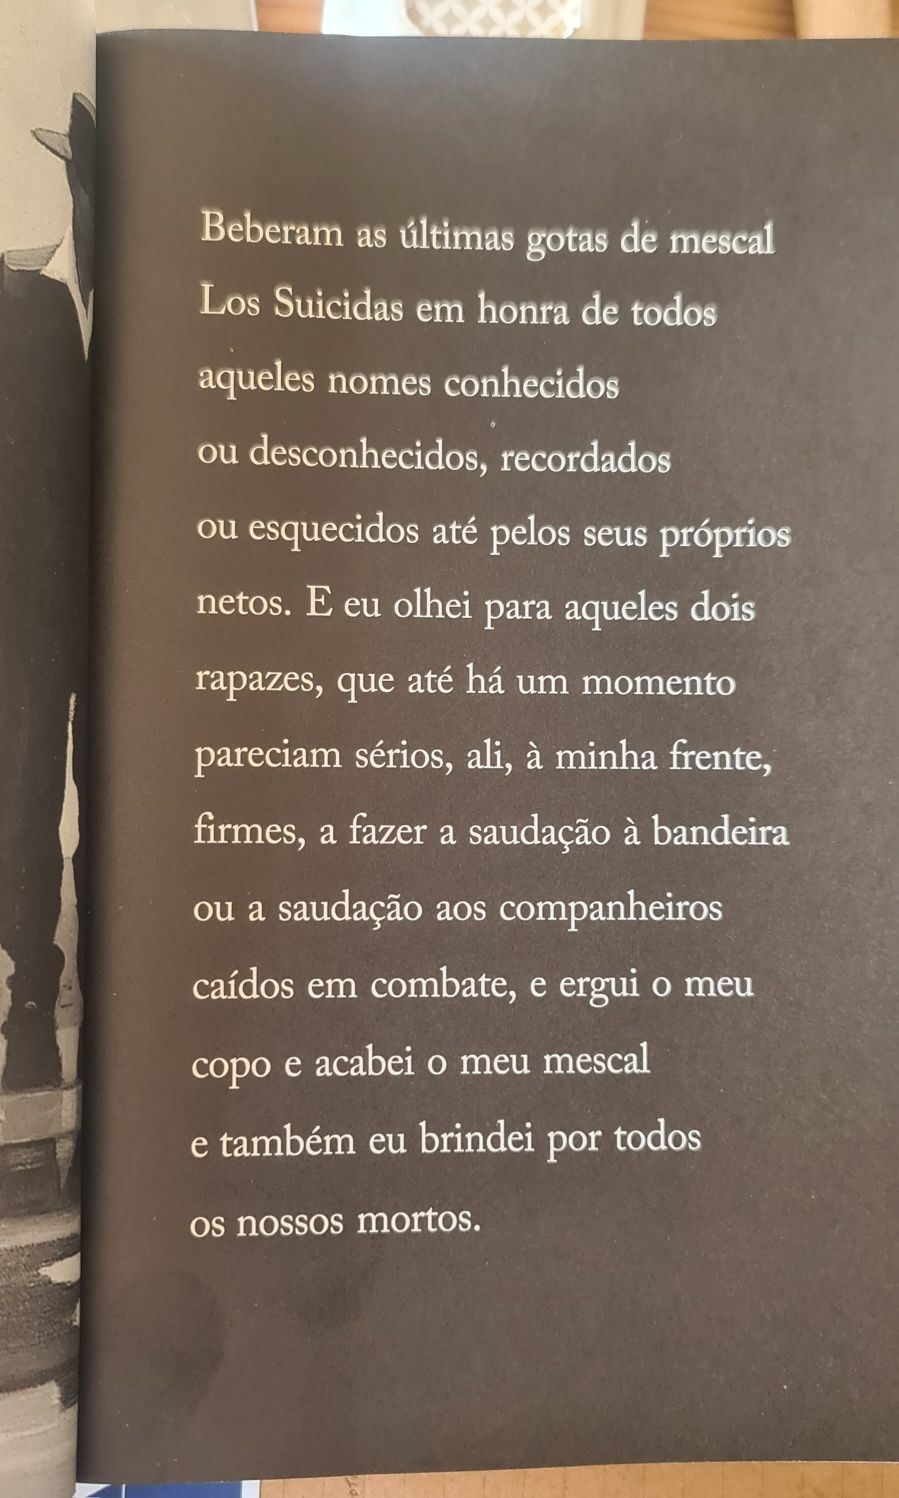 Detetivas Selvagens - Roberto Bolano